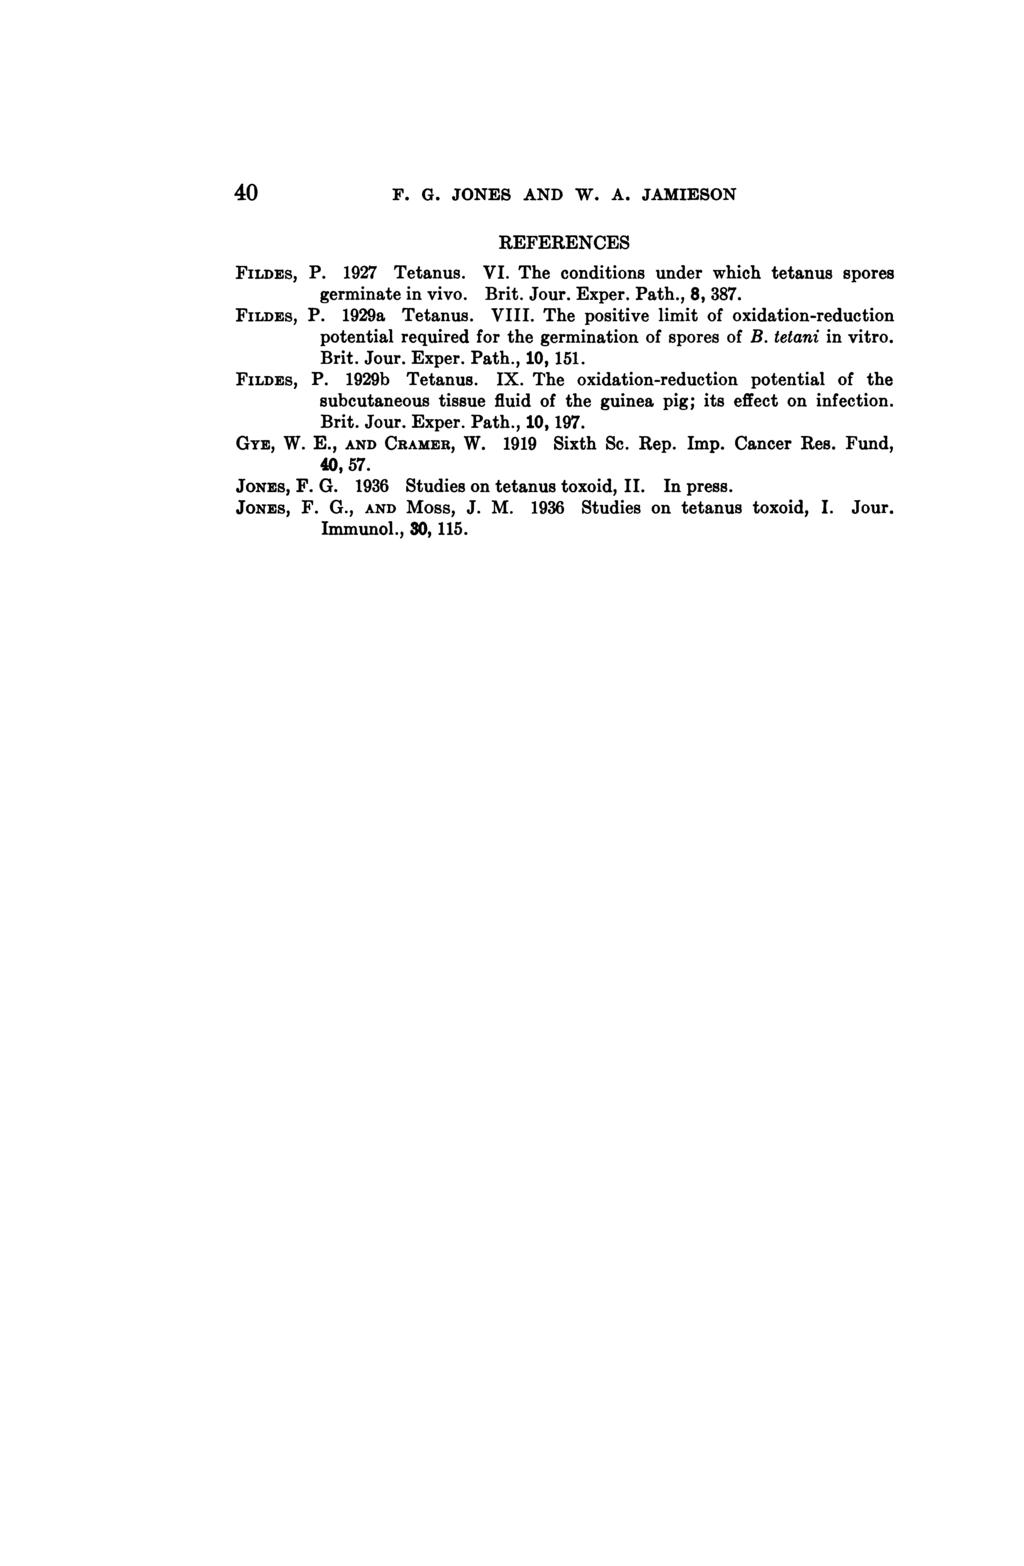 40 F. G. JONES AND W. A. JAMIESON REFERENCES FILDES, P. 1927 Tetanus. VI. The conditions under which tetanus spores germinate in vivo. Brit. Jour. Exper. Path., 8, 387. FILDES, P. 1929a Tetanus. VIII.